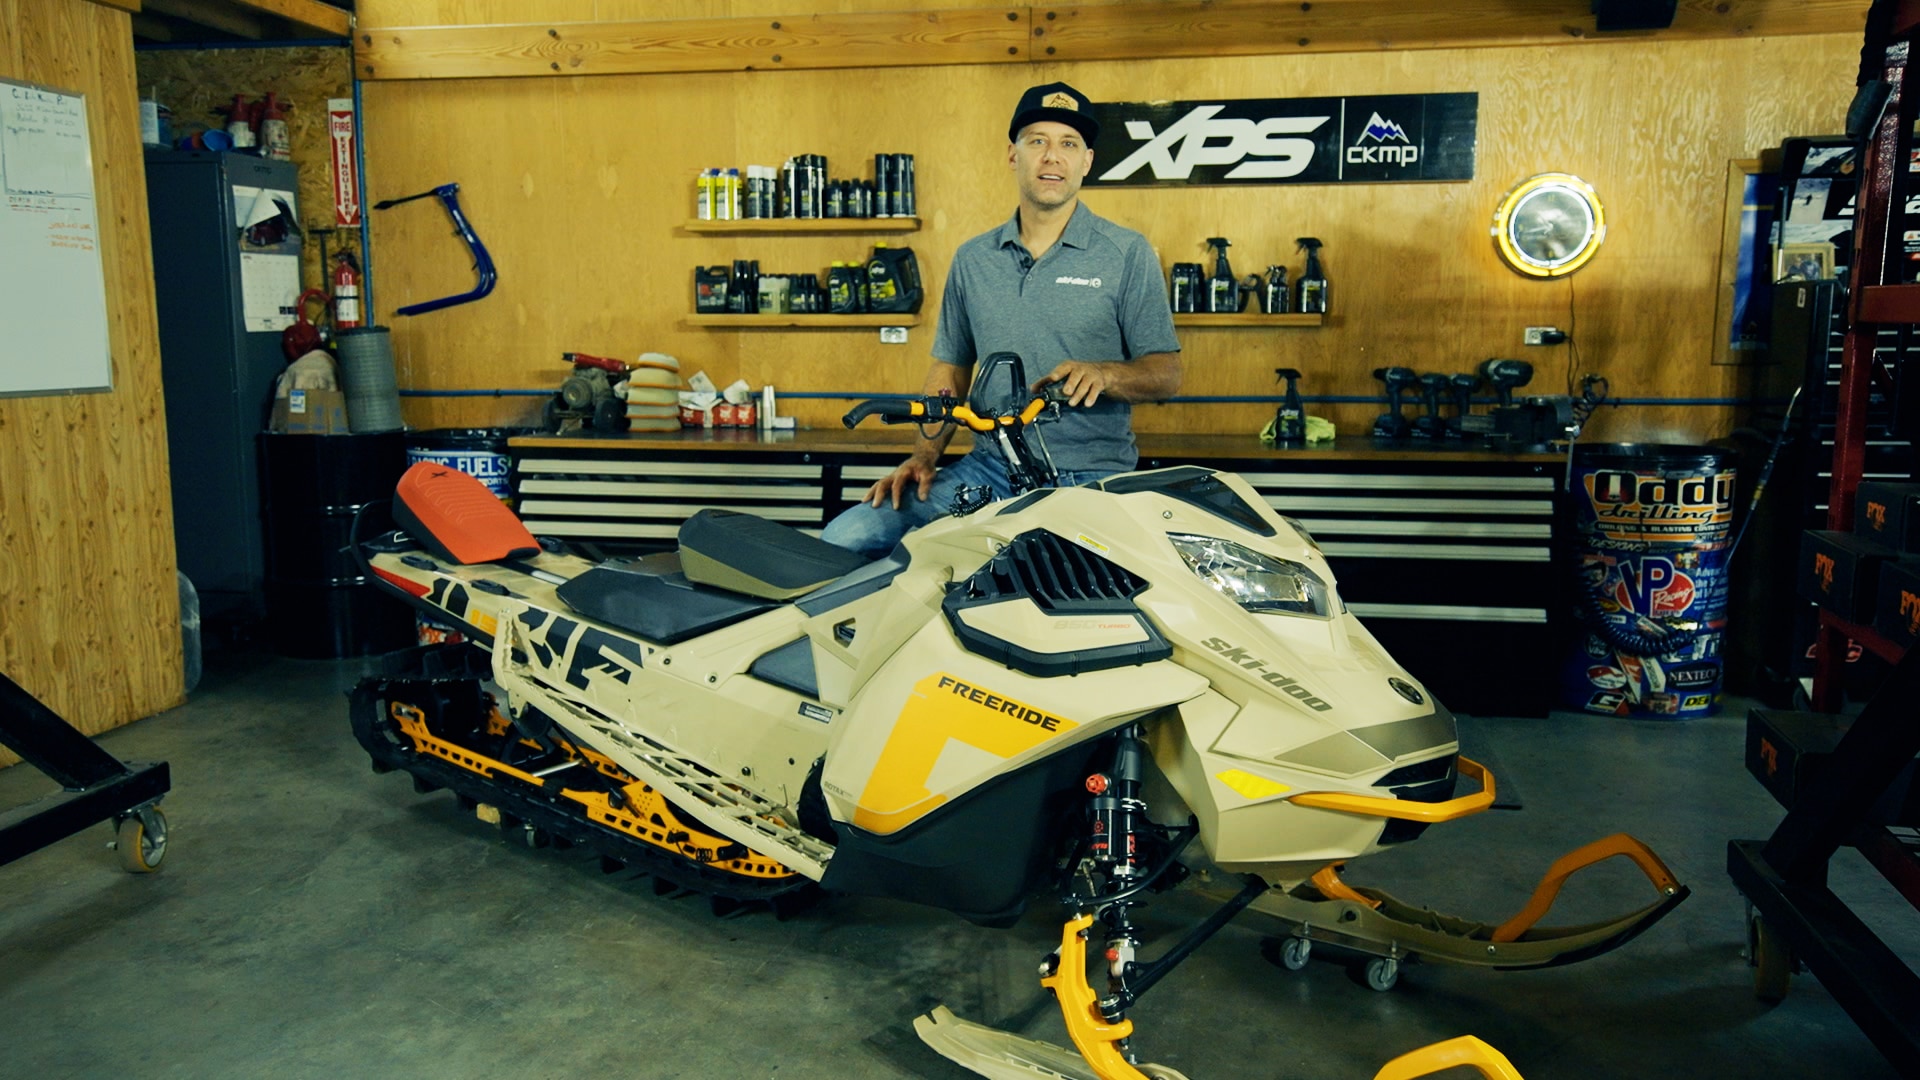 Carl Kuster customizing his deep snow snowmobile